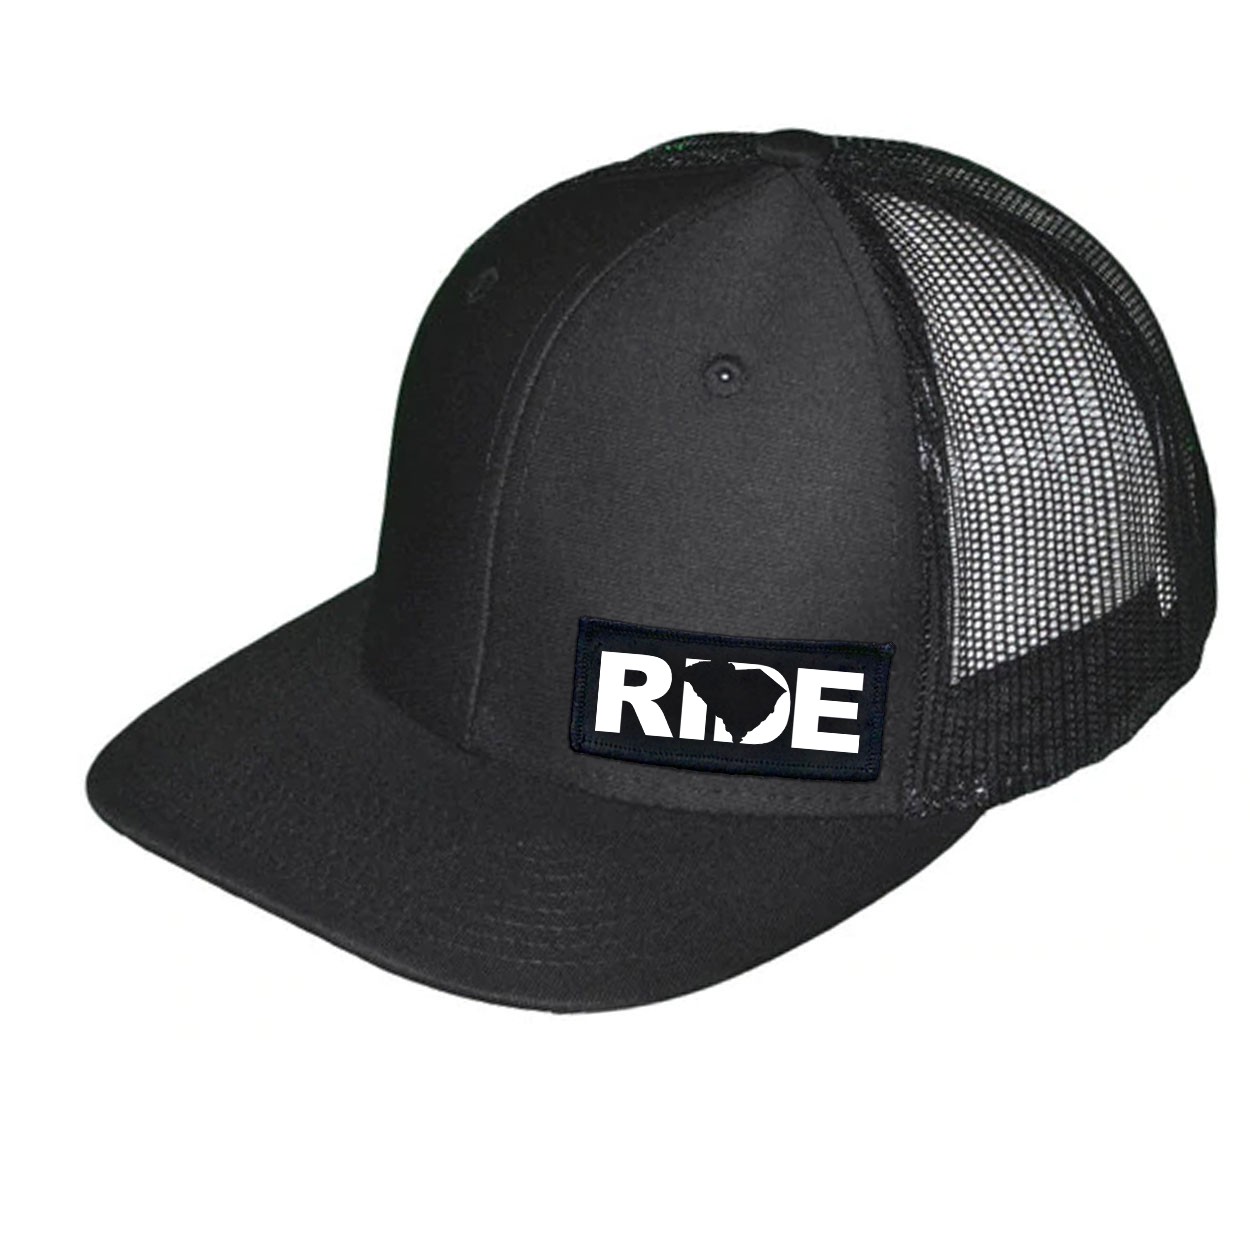 Ride South Carolina Night Out Woven Patch Snapback Trucker Hat Black (White Logo)